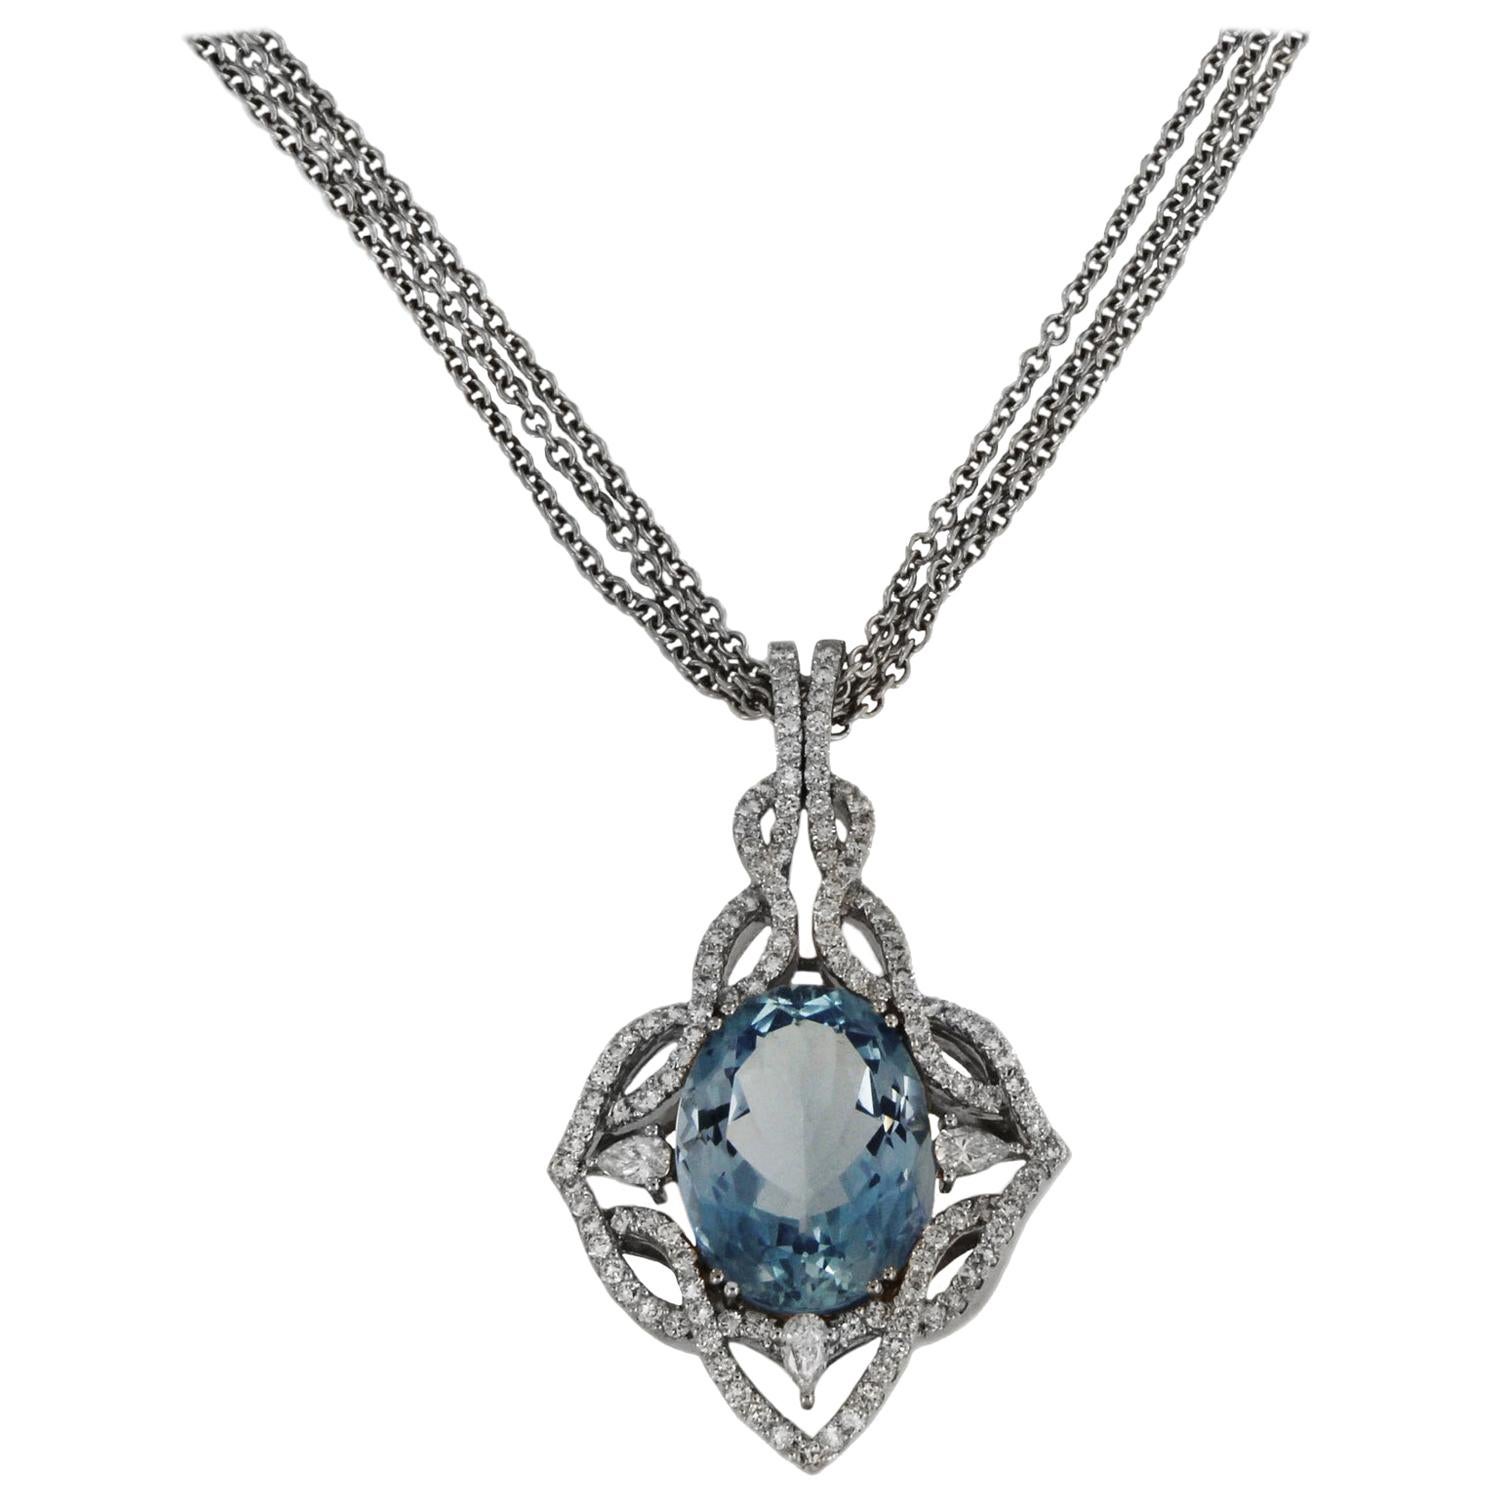 Kristina 18 Karat White Gold Necklace with Diamonds and Aquamarine